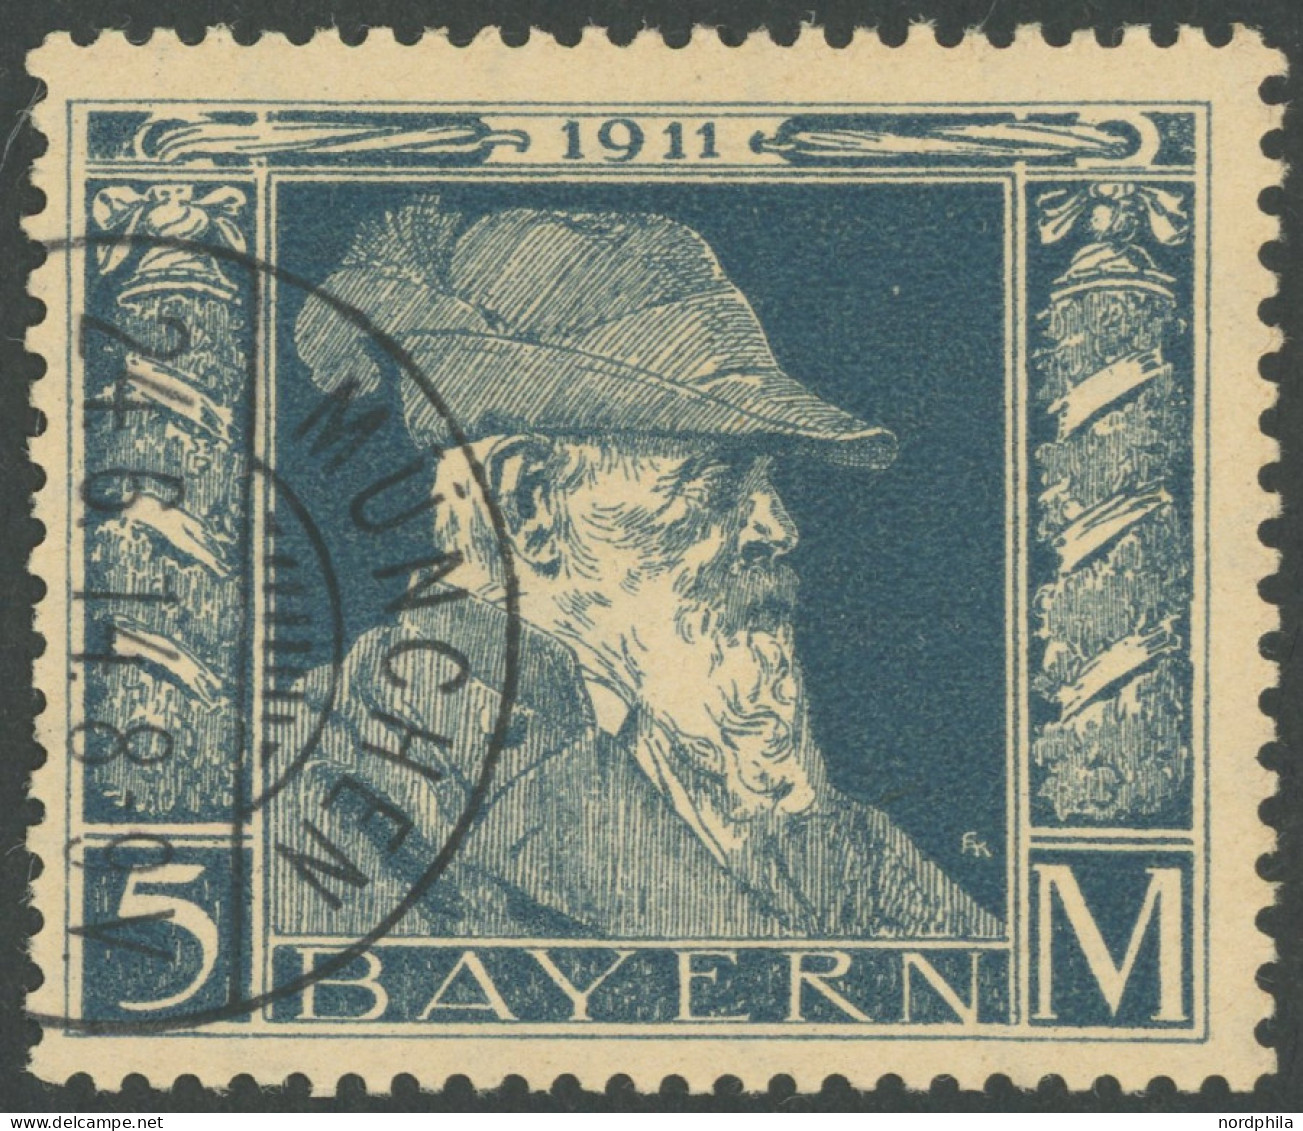 BAYERN 89II O, 1911, 5 M. Luitpold, Type II, Pracht, Mi. 220.- - Usados